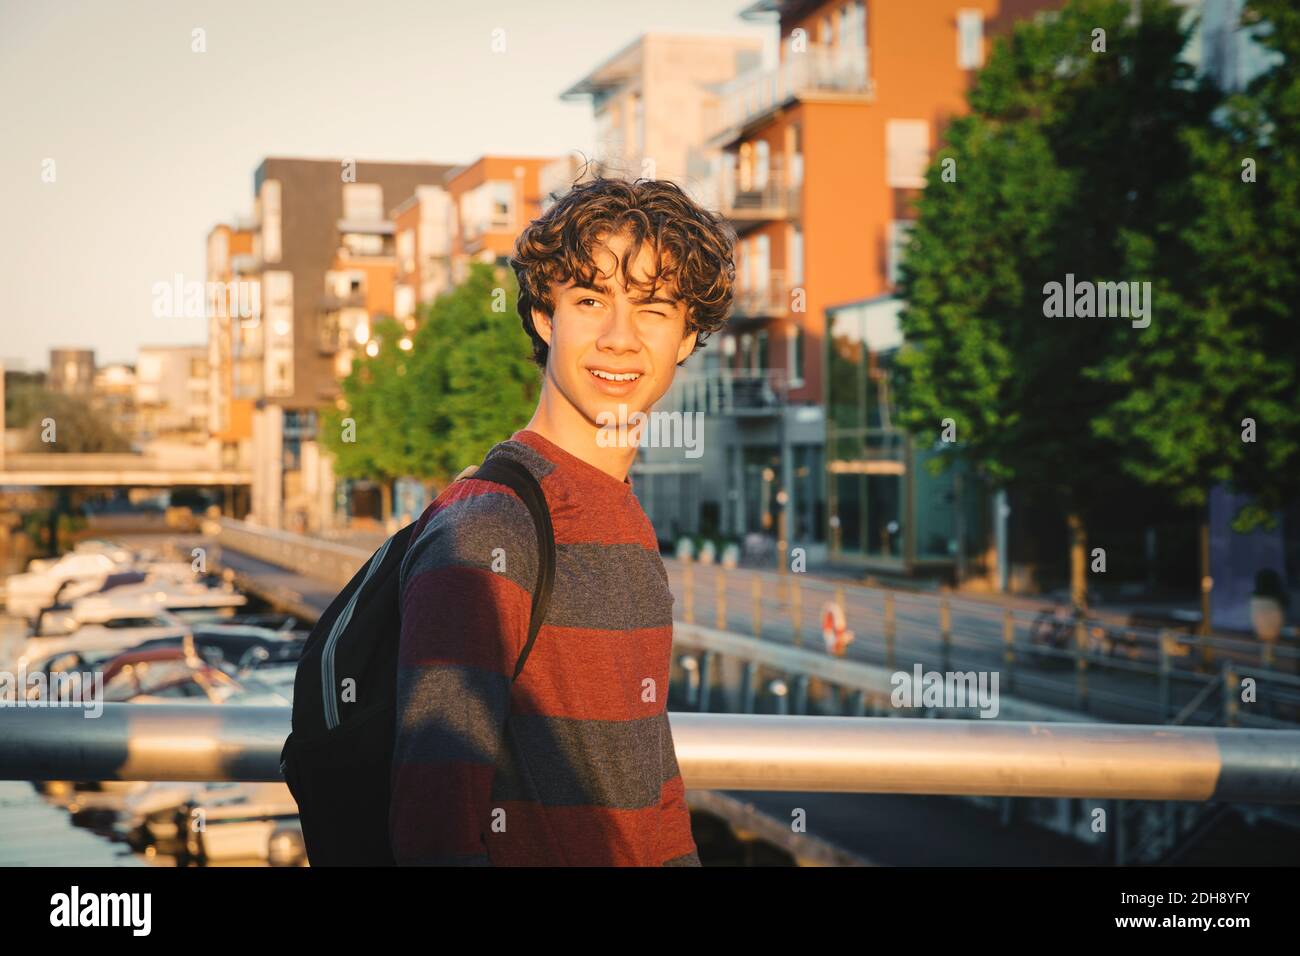 Smiling teenage boy winking on bridge in city during sunset Stock Photo